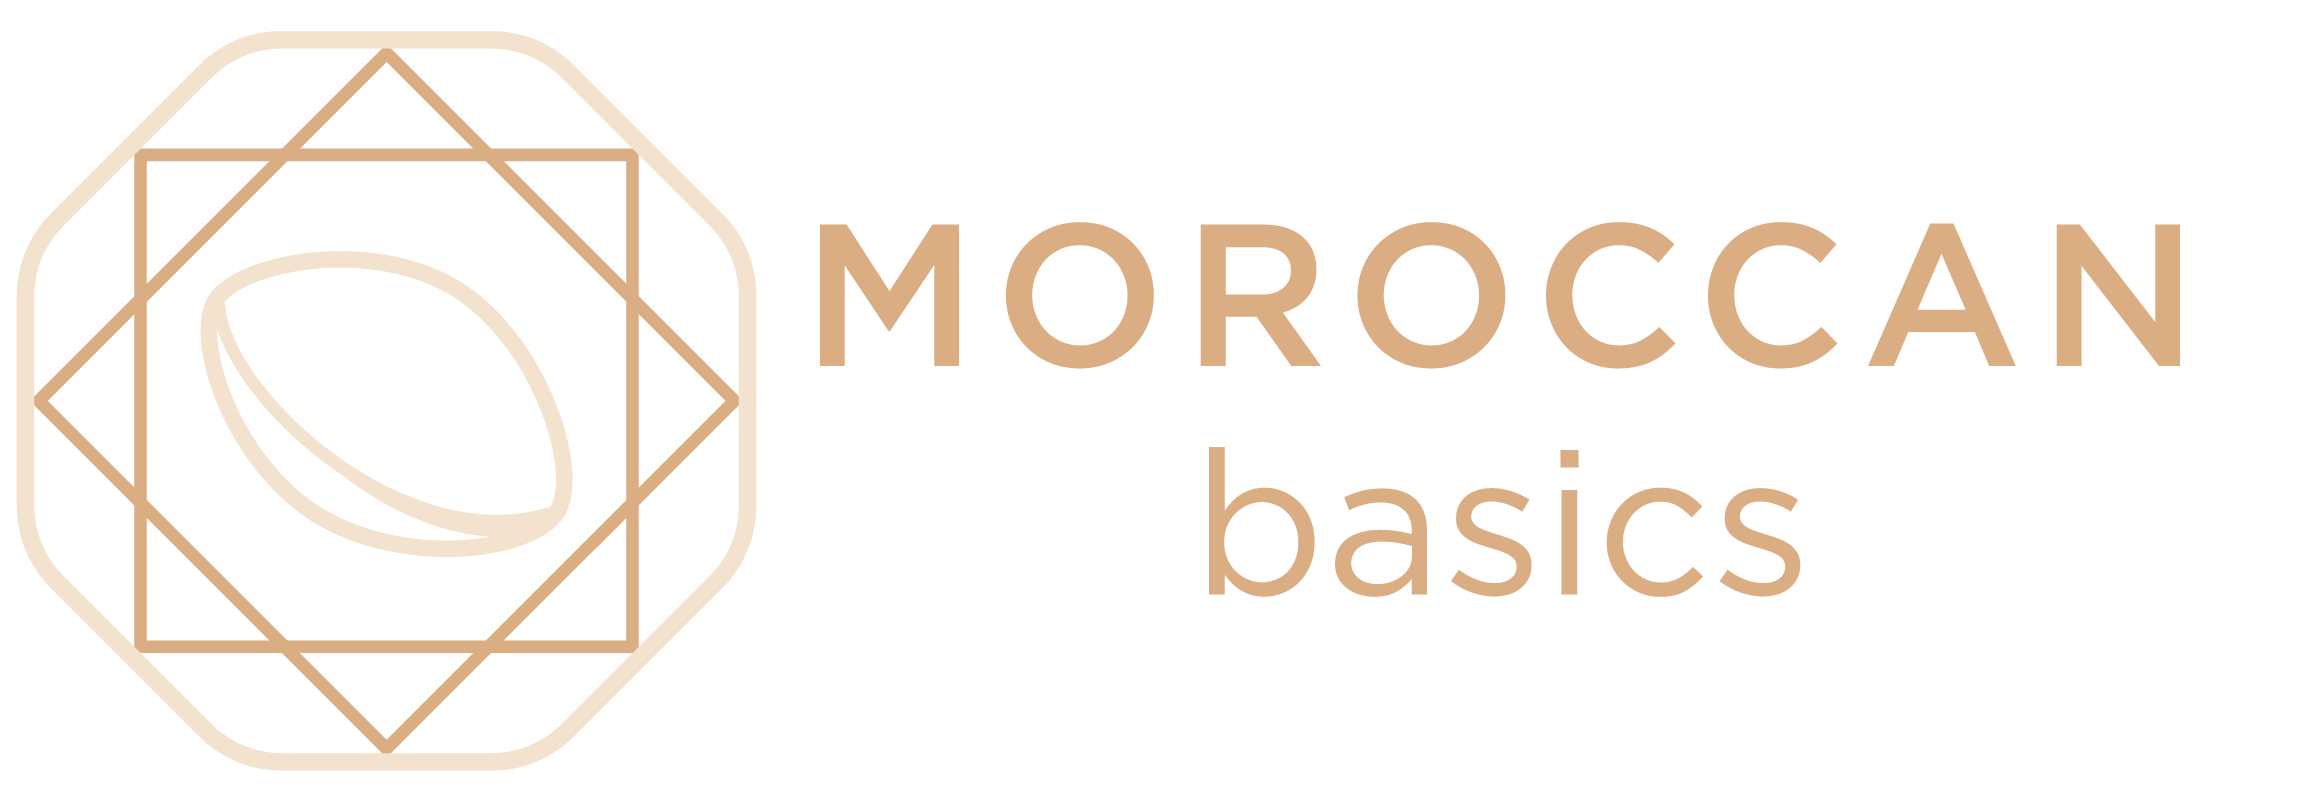 moroccan_basics